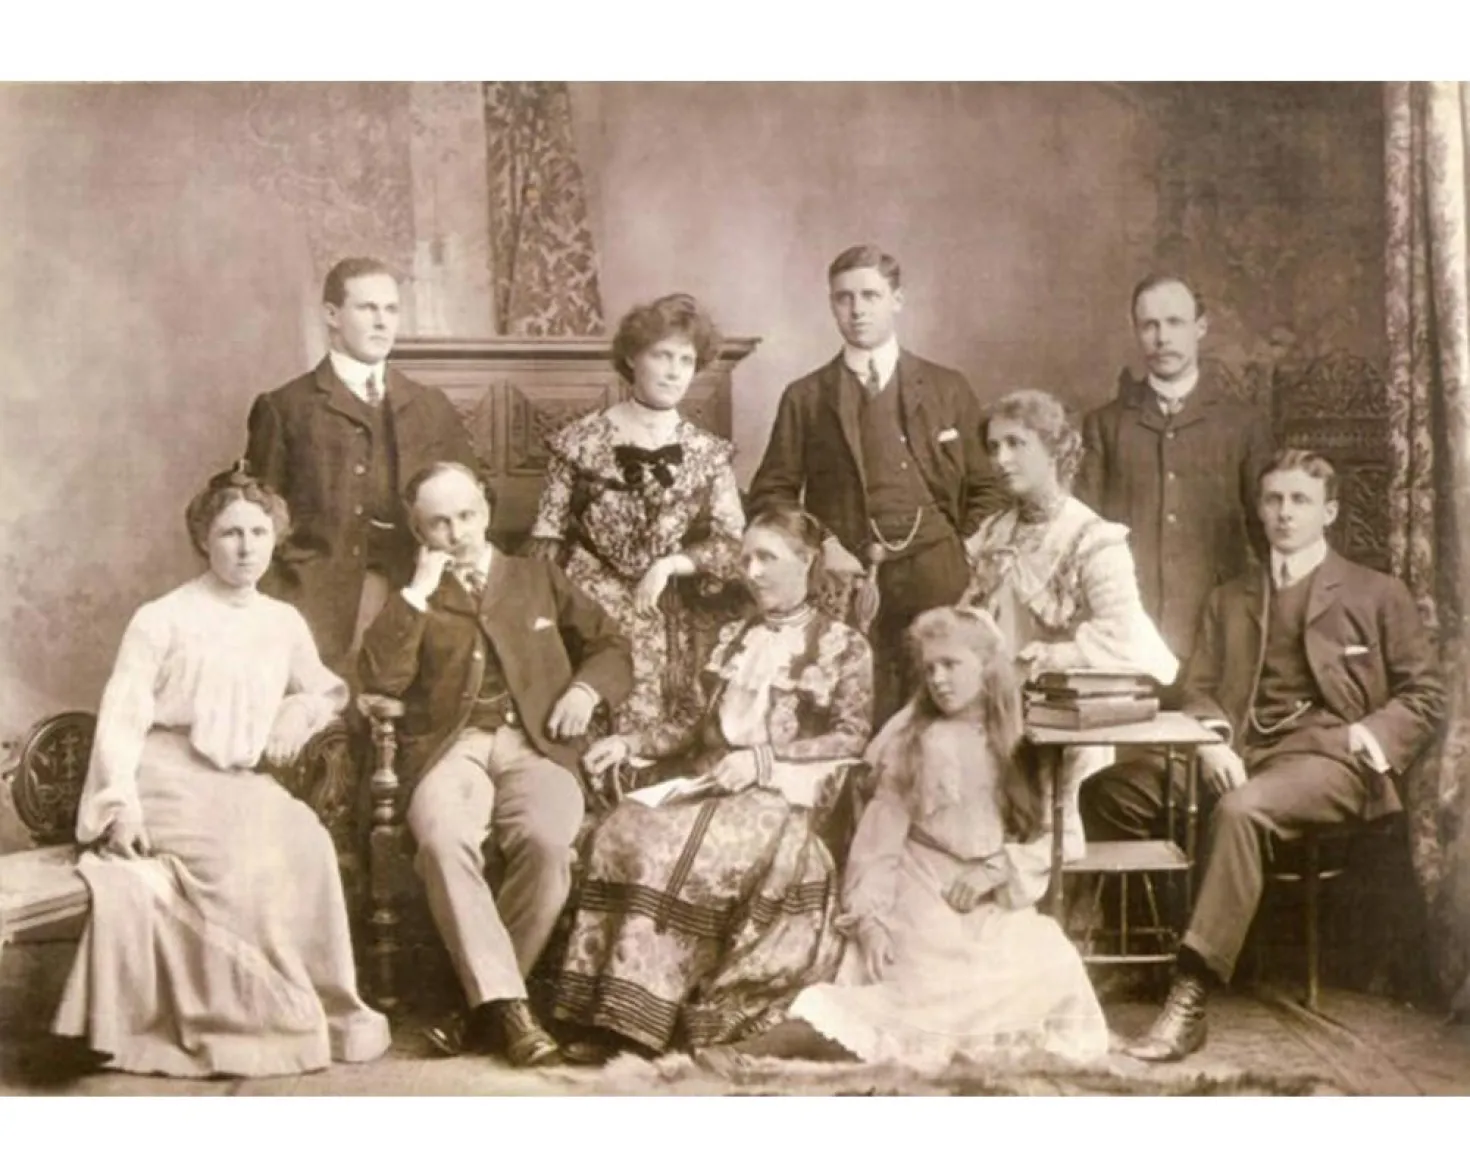 The Gardiner Family History image